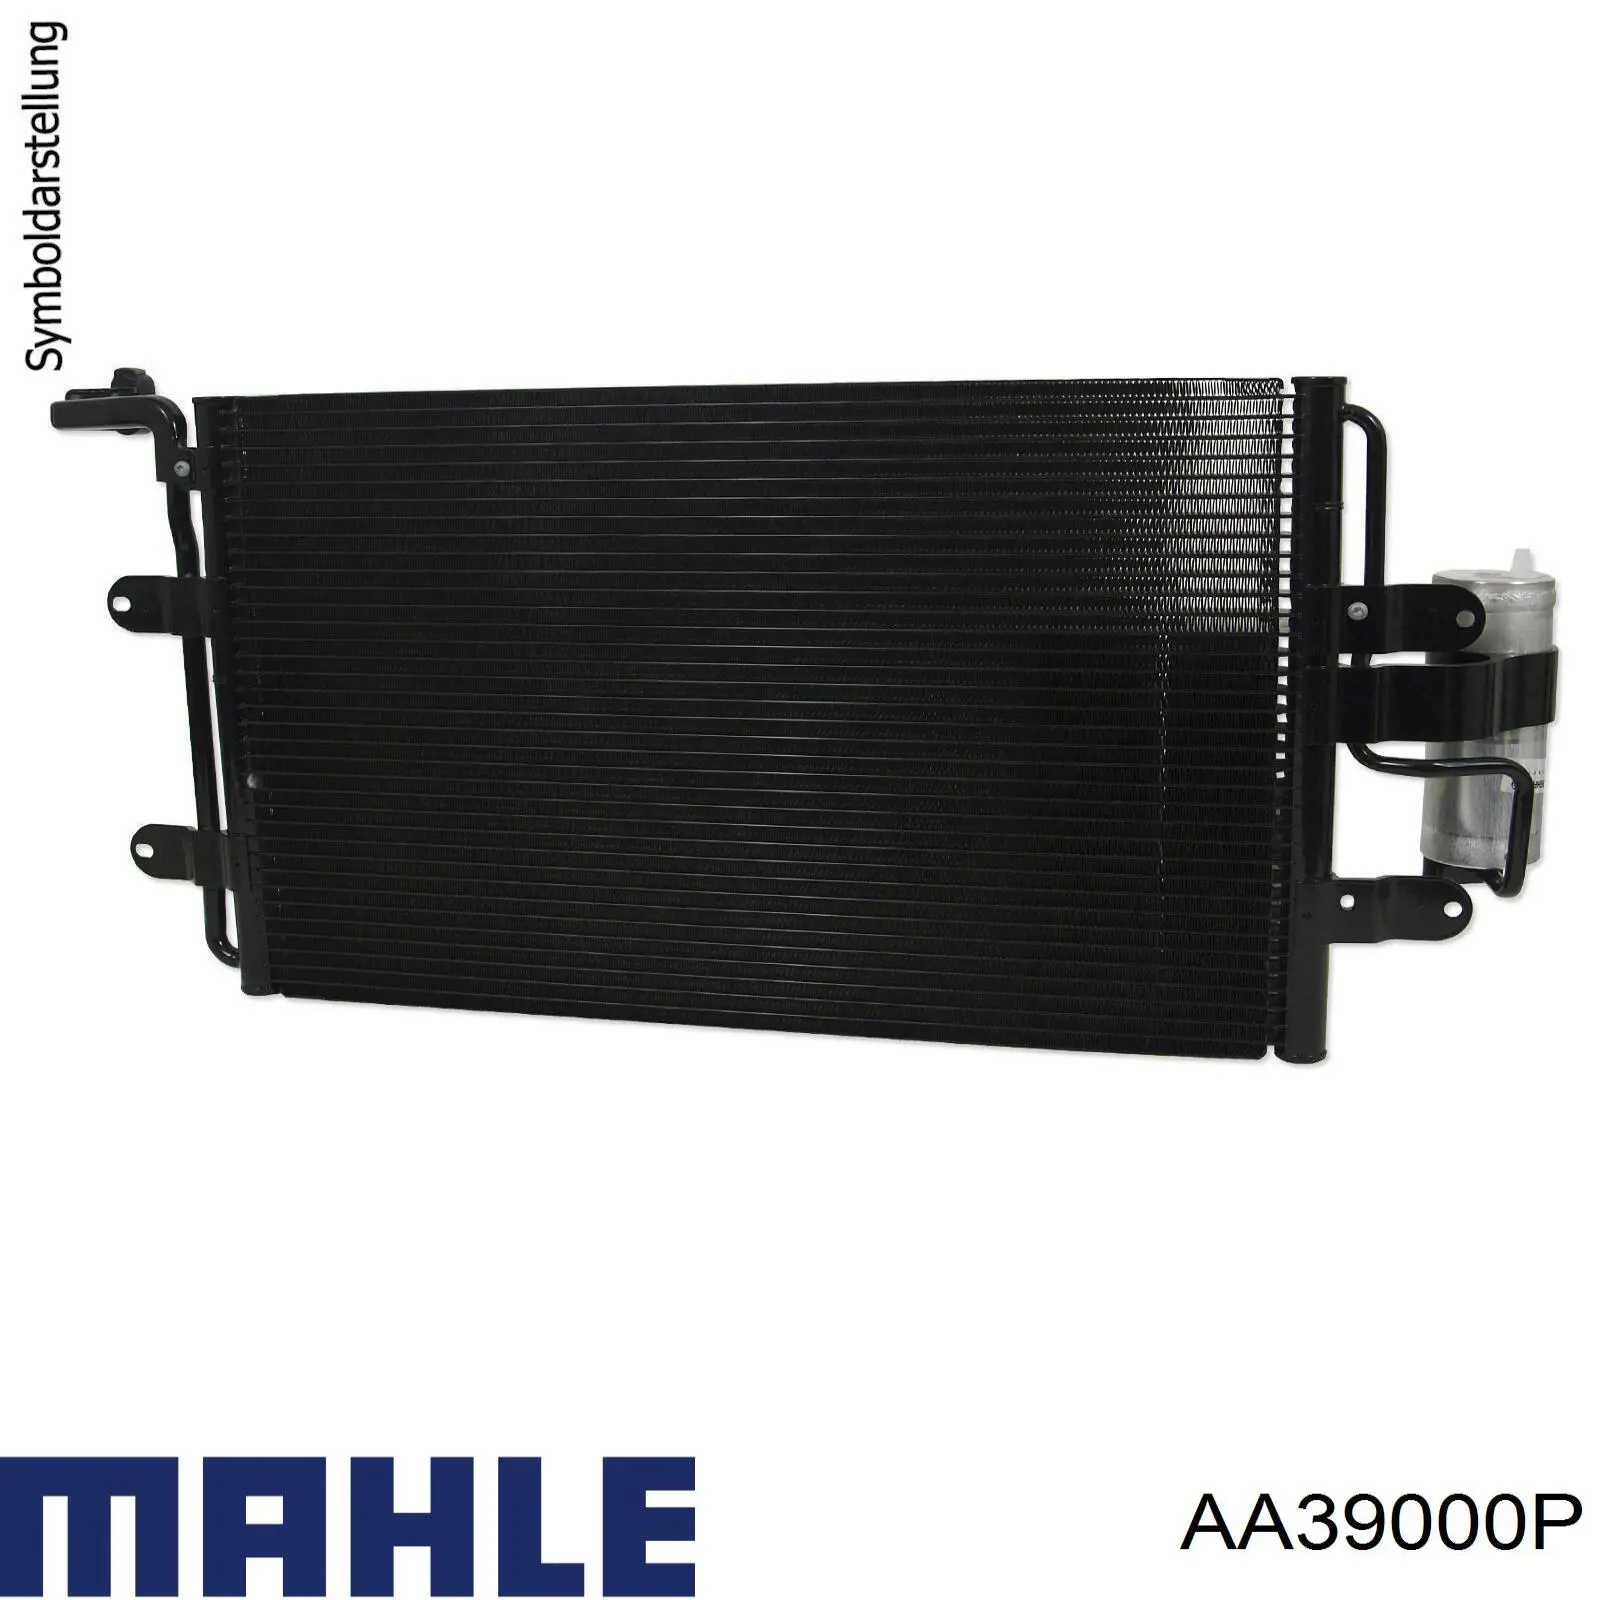 Elemento De Reglaje Valvula Mezcladora Actuador de Compuerta AA39000P Mahle Original